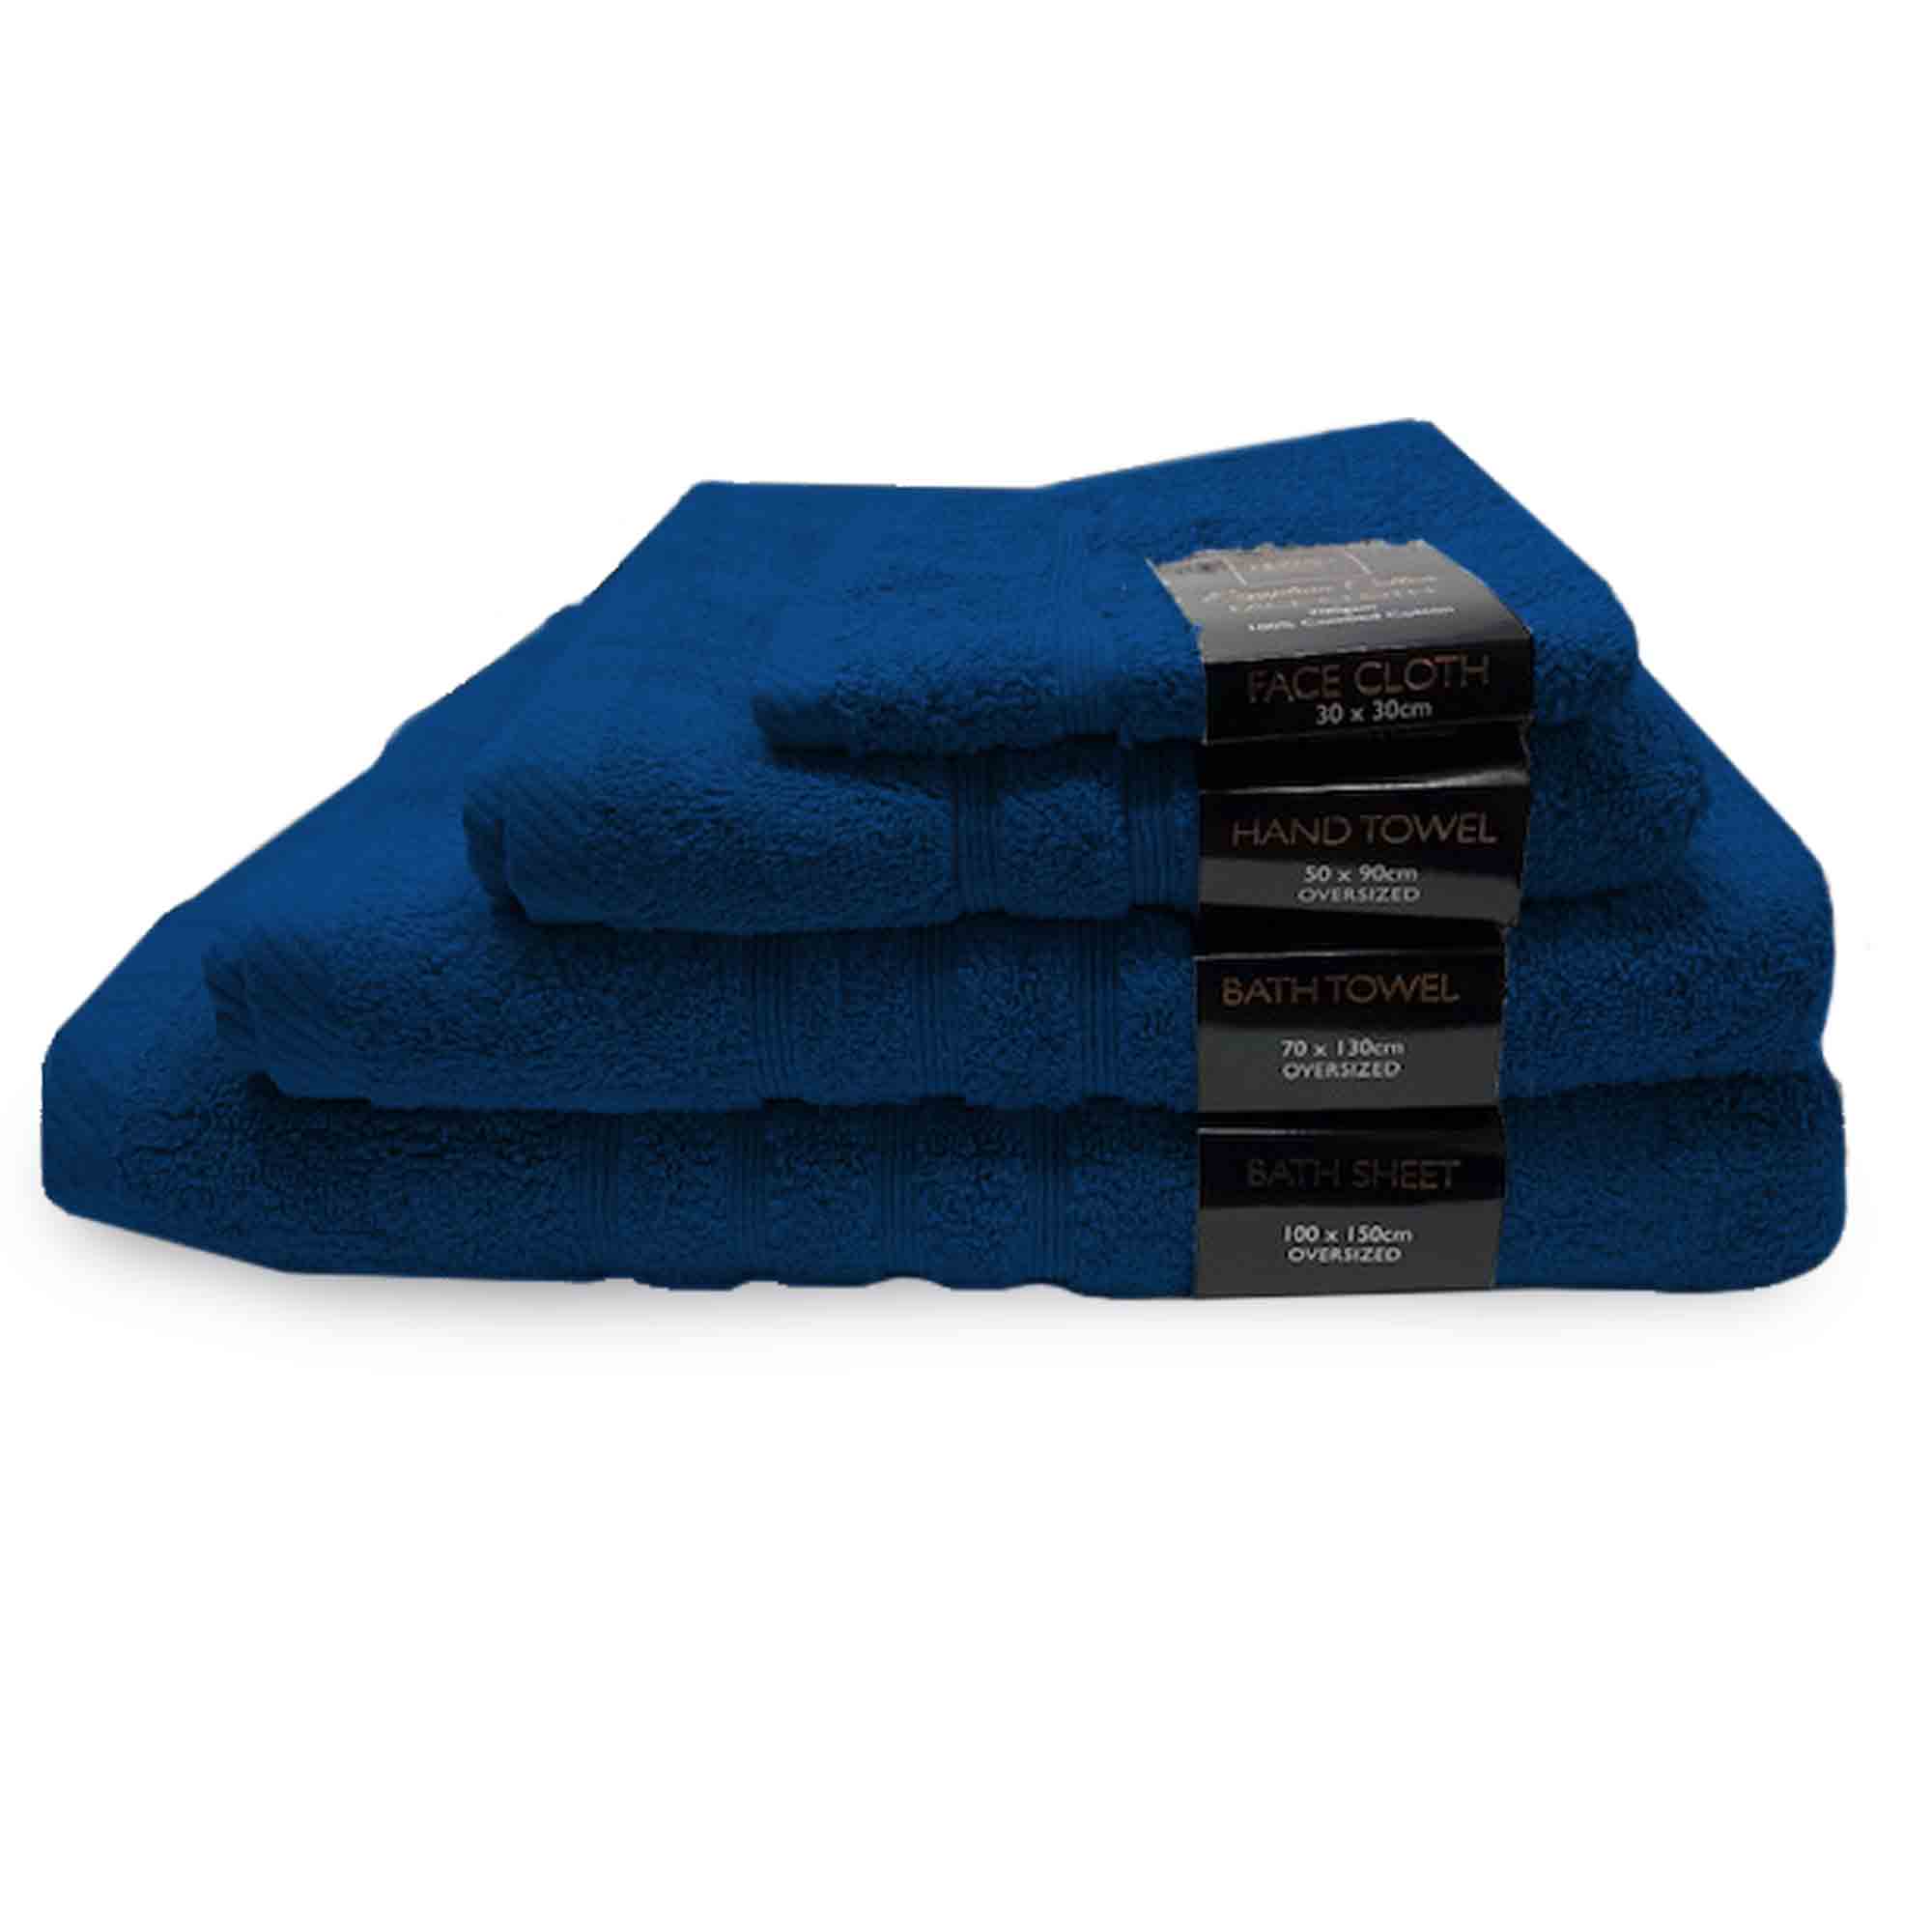 Lewis’s Luxury Egyptian 100% Cotton Towel Range - Petrol - Face Cloth  | TJ Hughes